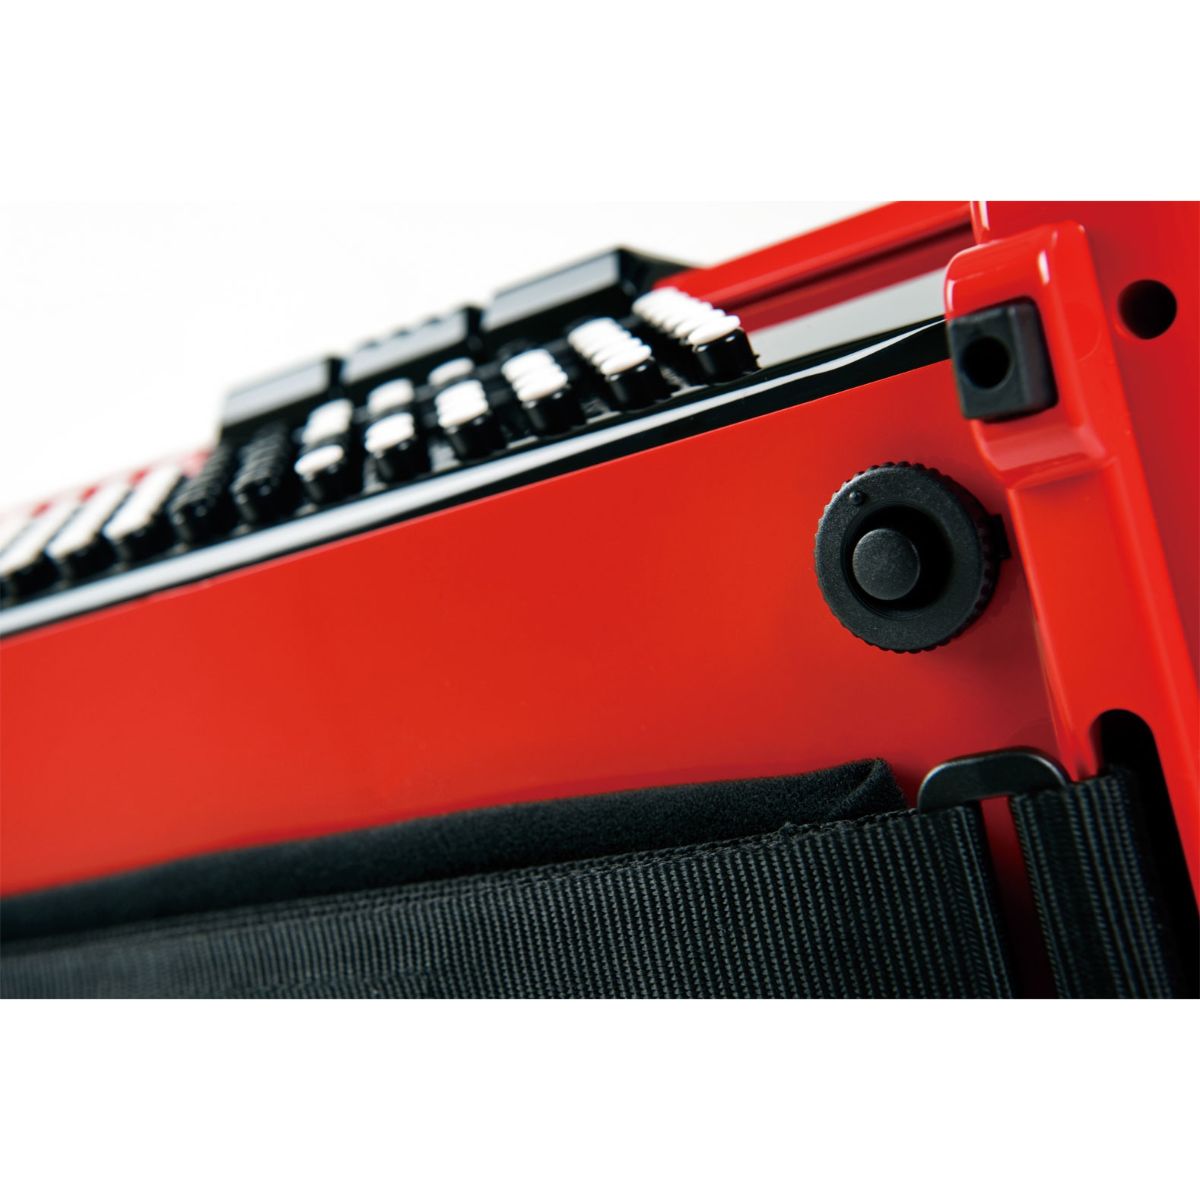 Roland FR-1xb Button V-Accordion, 72 Bass, Red